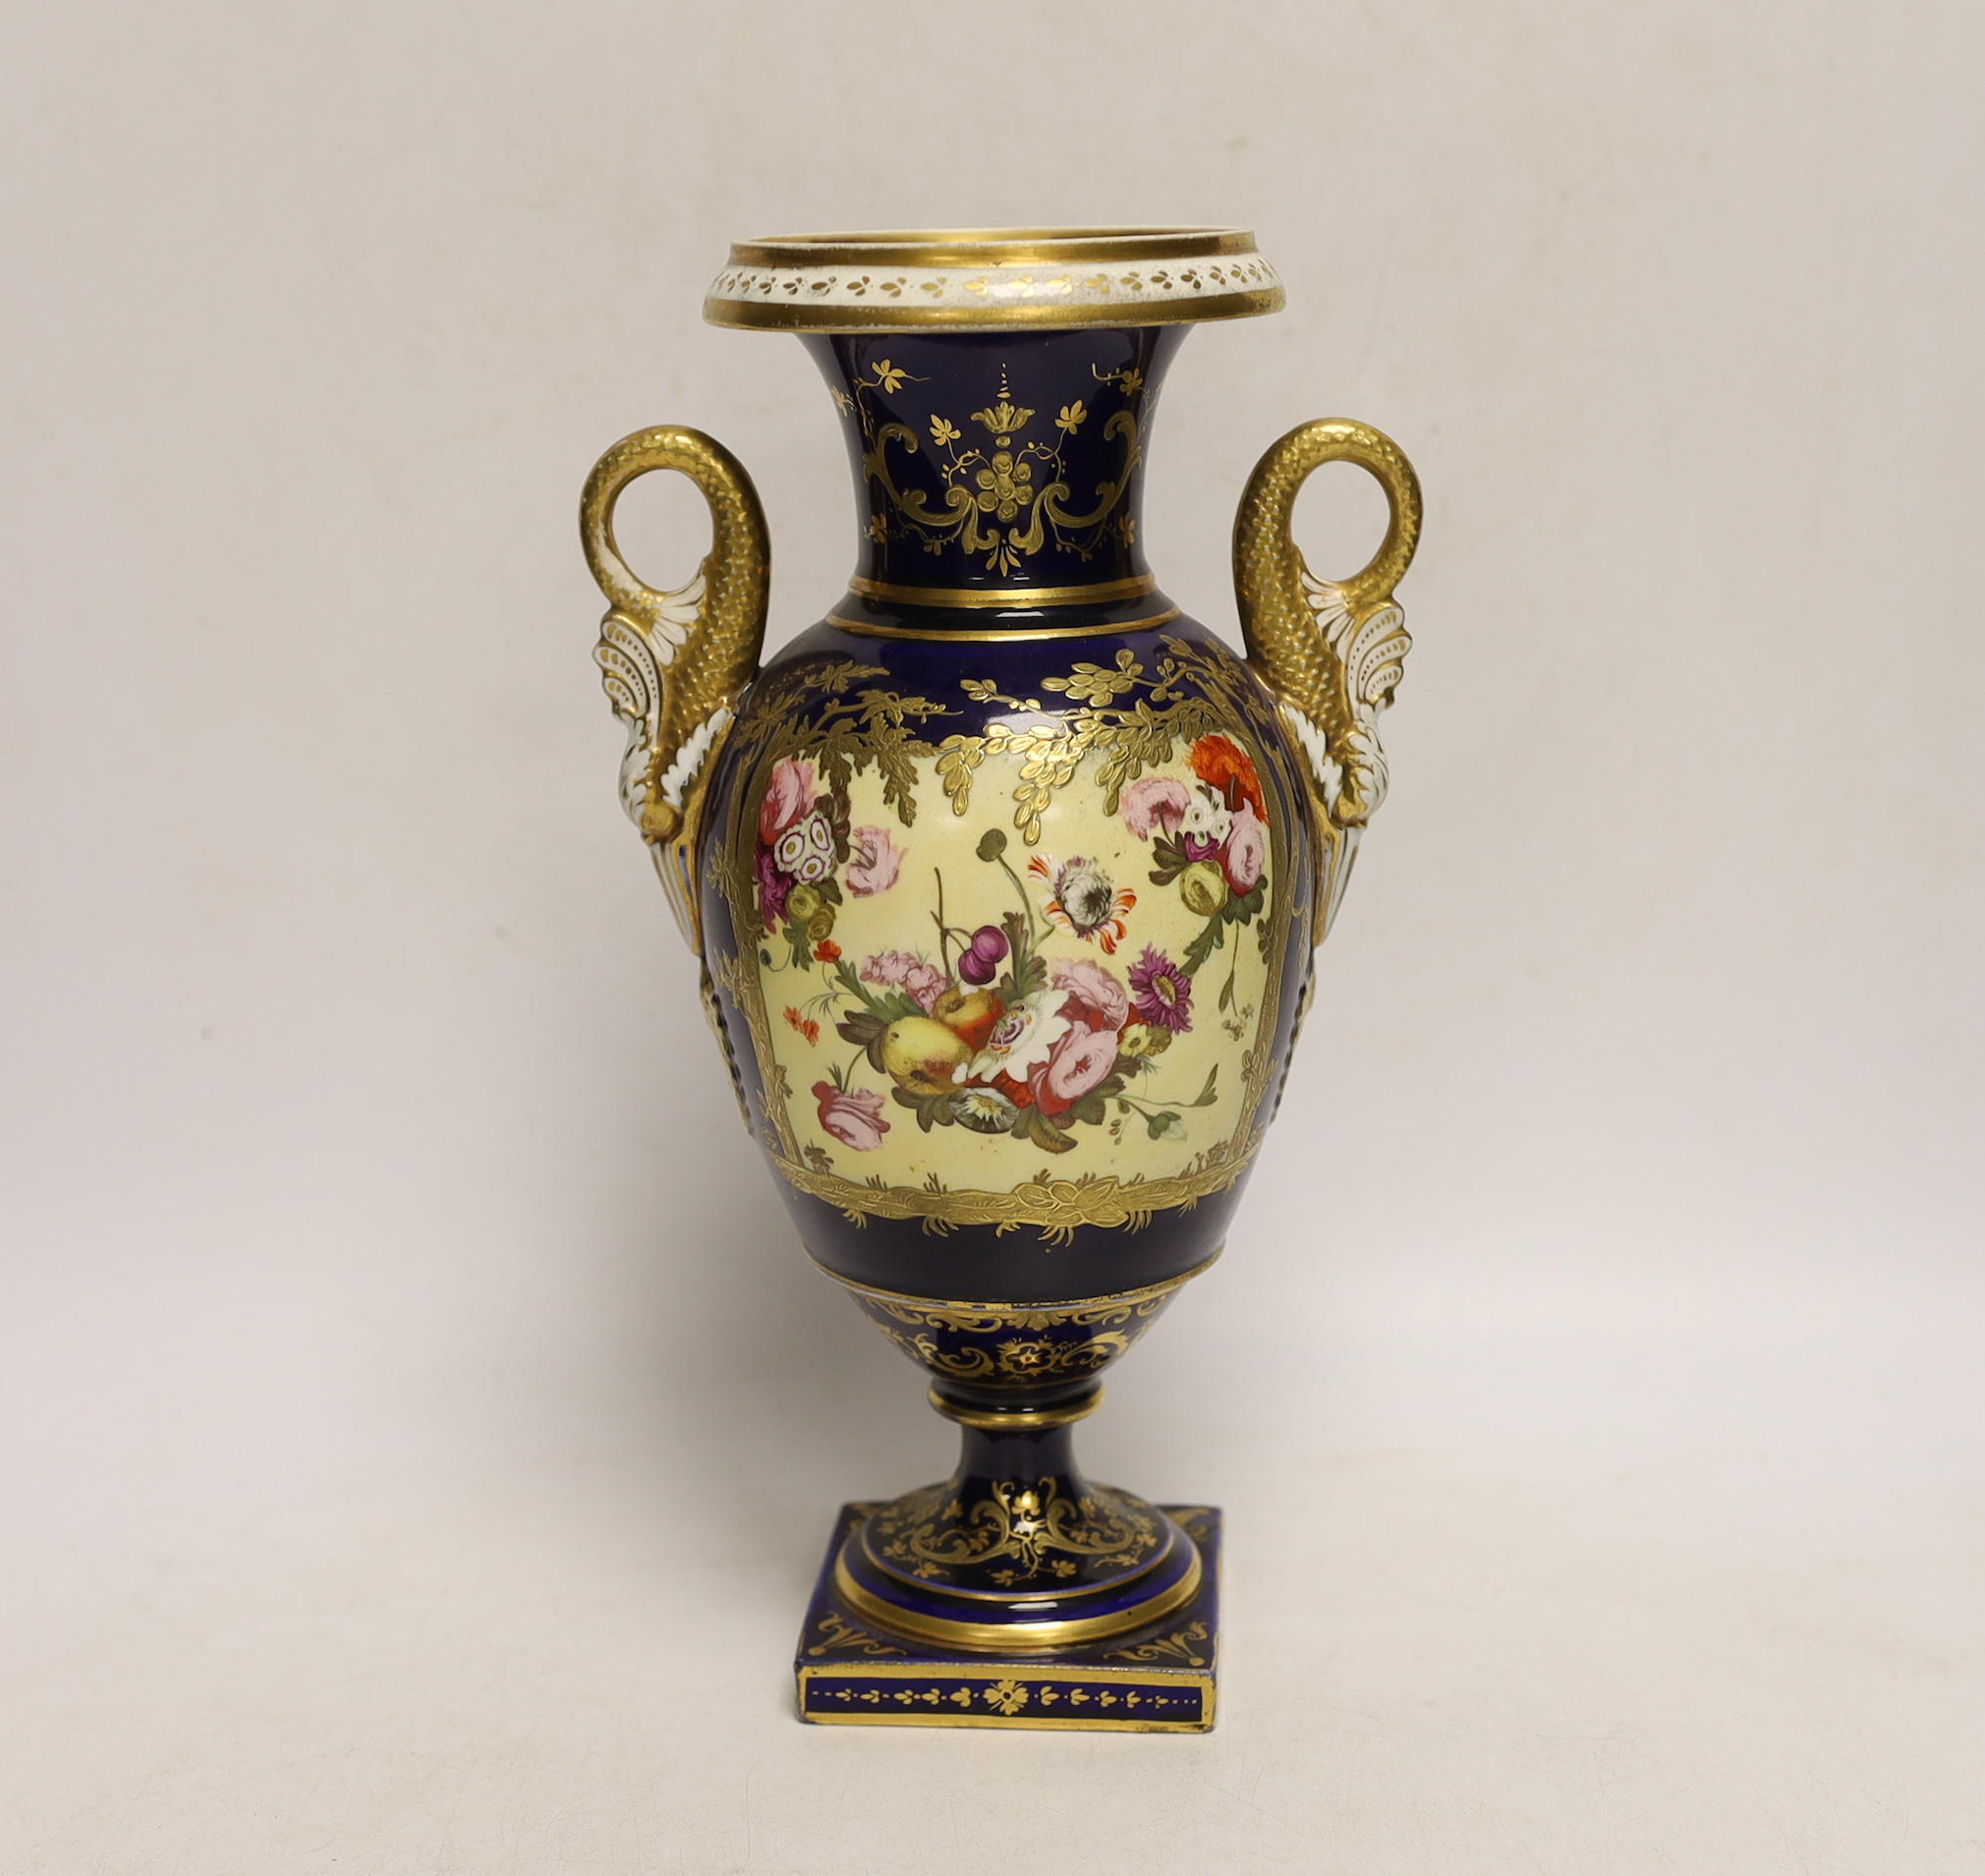 An English porcelain vase, c.1825, (label on base), exhibited at Grosvenor House Antiques Fair, 26.5cm